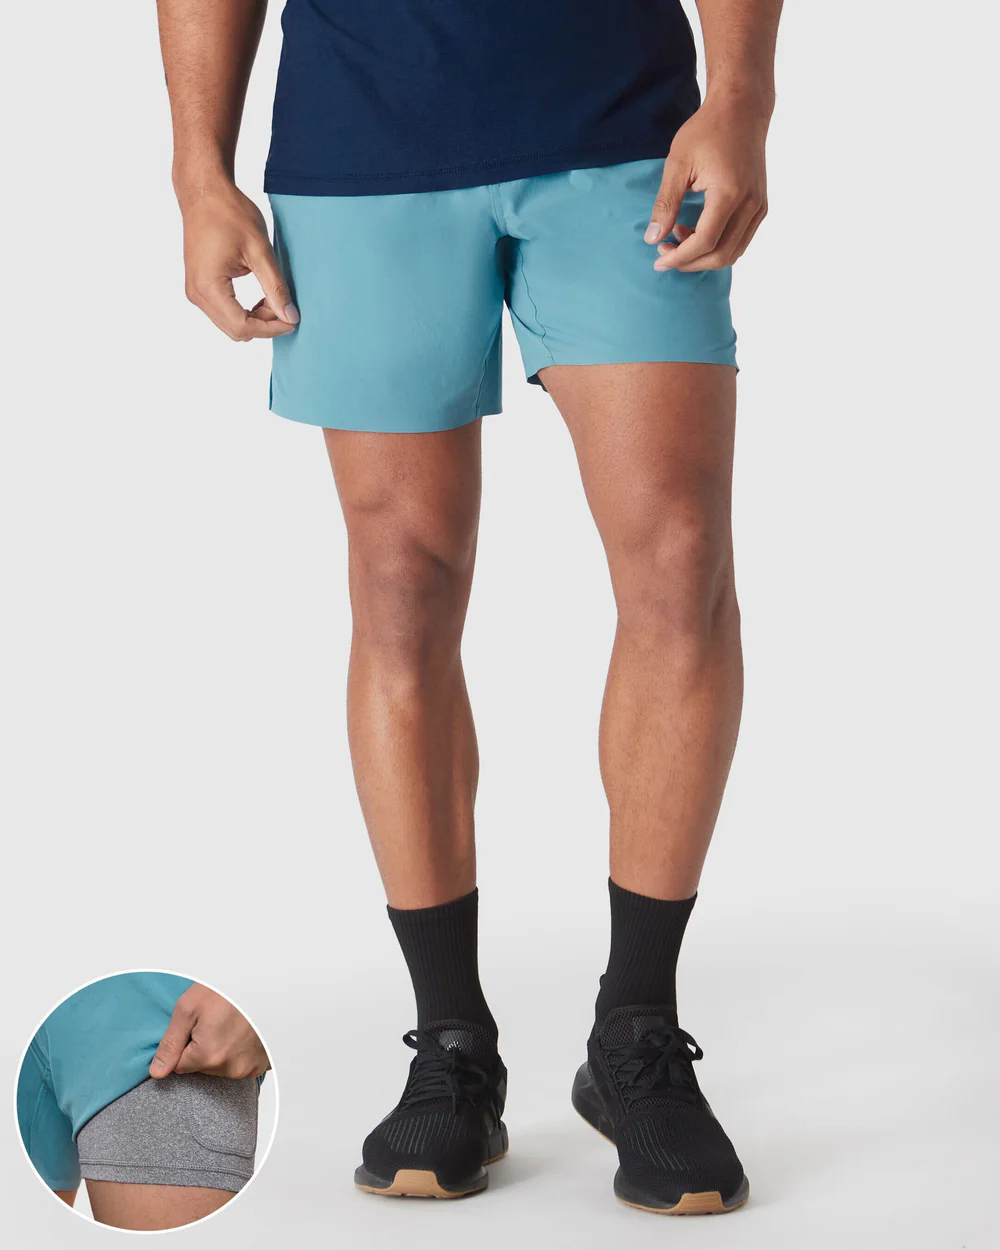 True Classic男士运动健身短裤 7英寸 含内衬 速干弹力 lulu平替